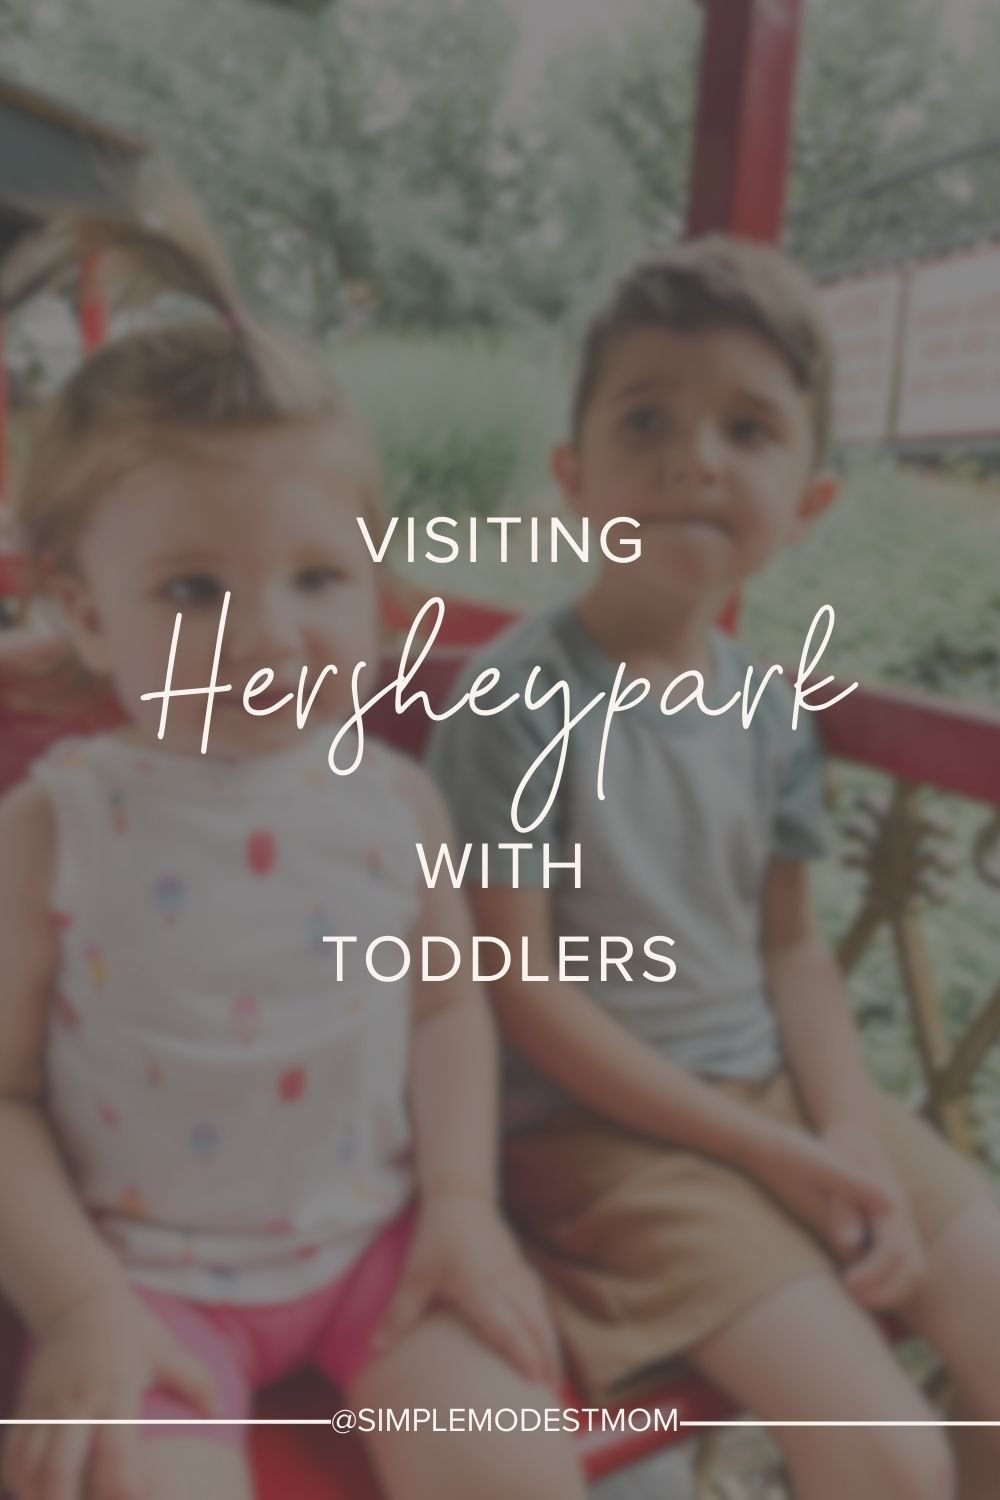 Visiting Hersheypark with Little Kids - Simple Modest Mom.jpg